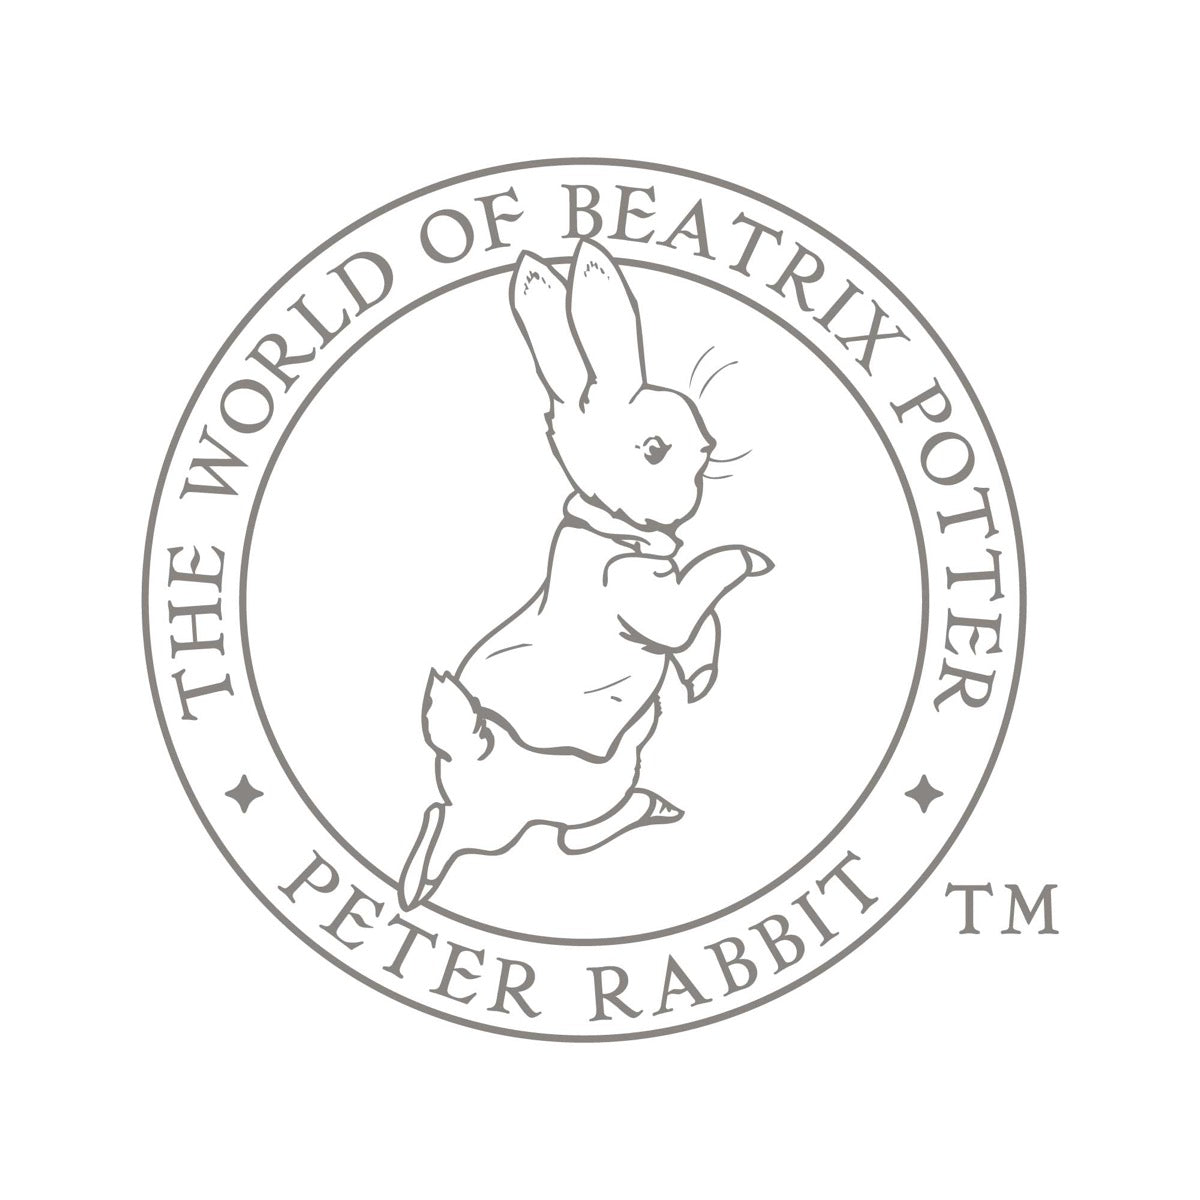 Peter Rabbit Print - Story Time Print